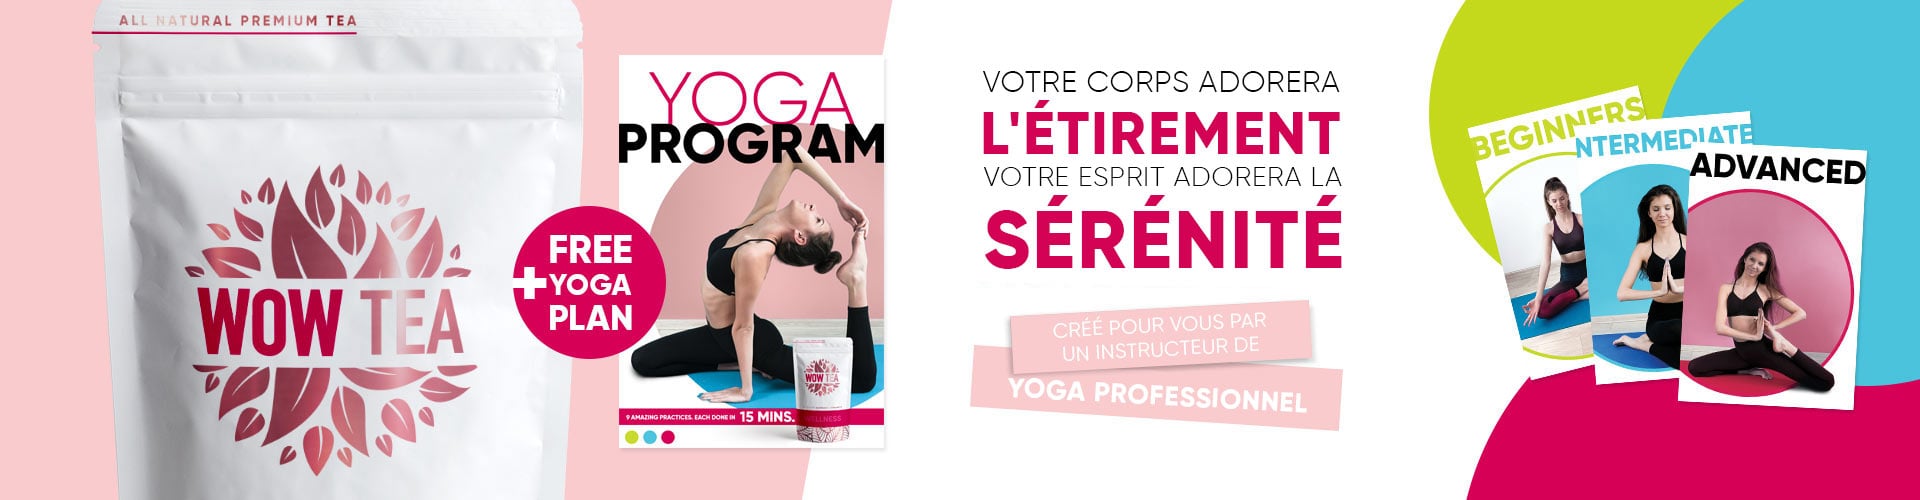 Yoga-Banner-desktop-FR